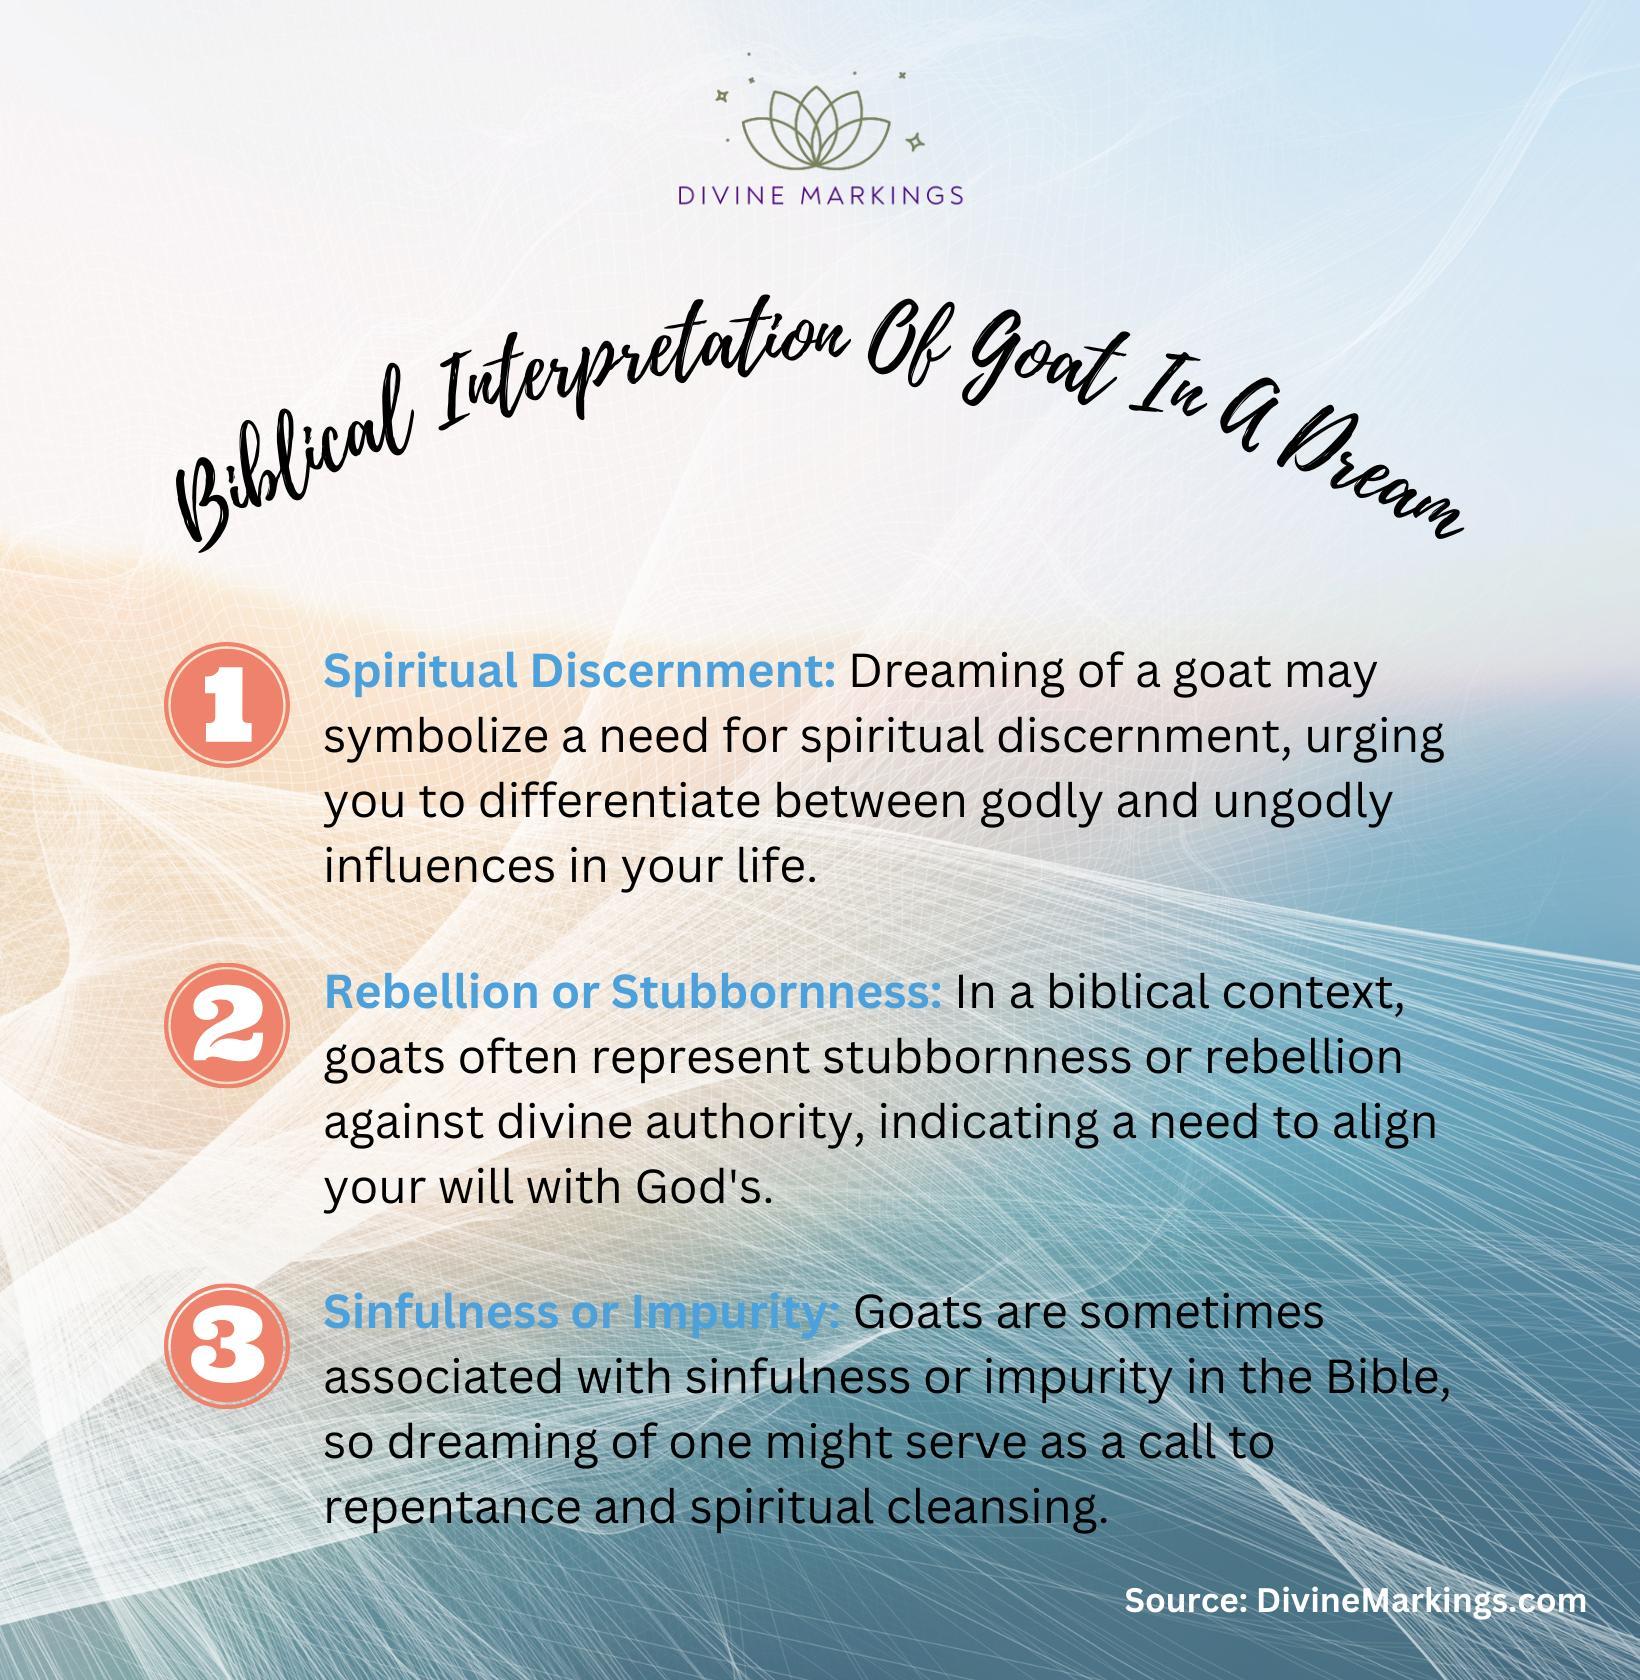 Biblical Interpretation Of Goat In A Dream - infographic